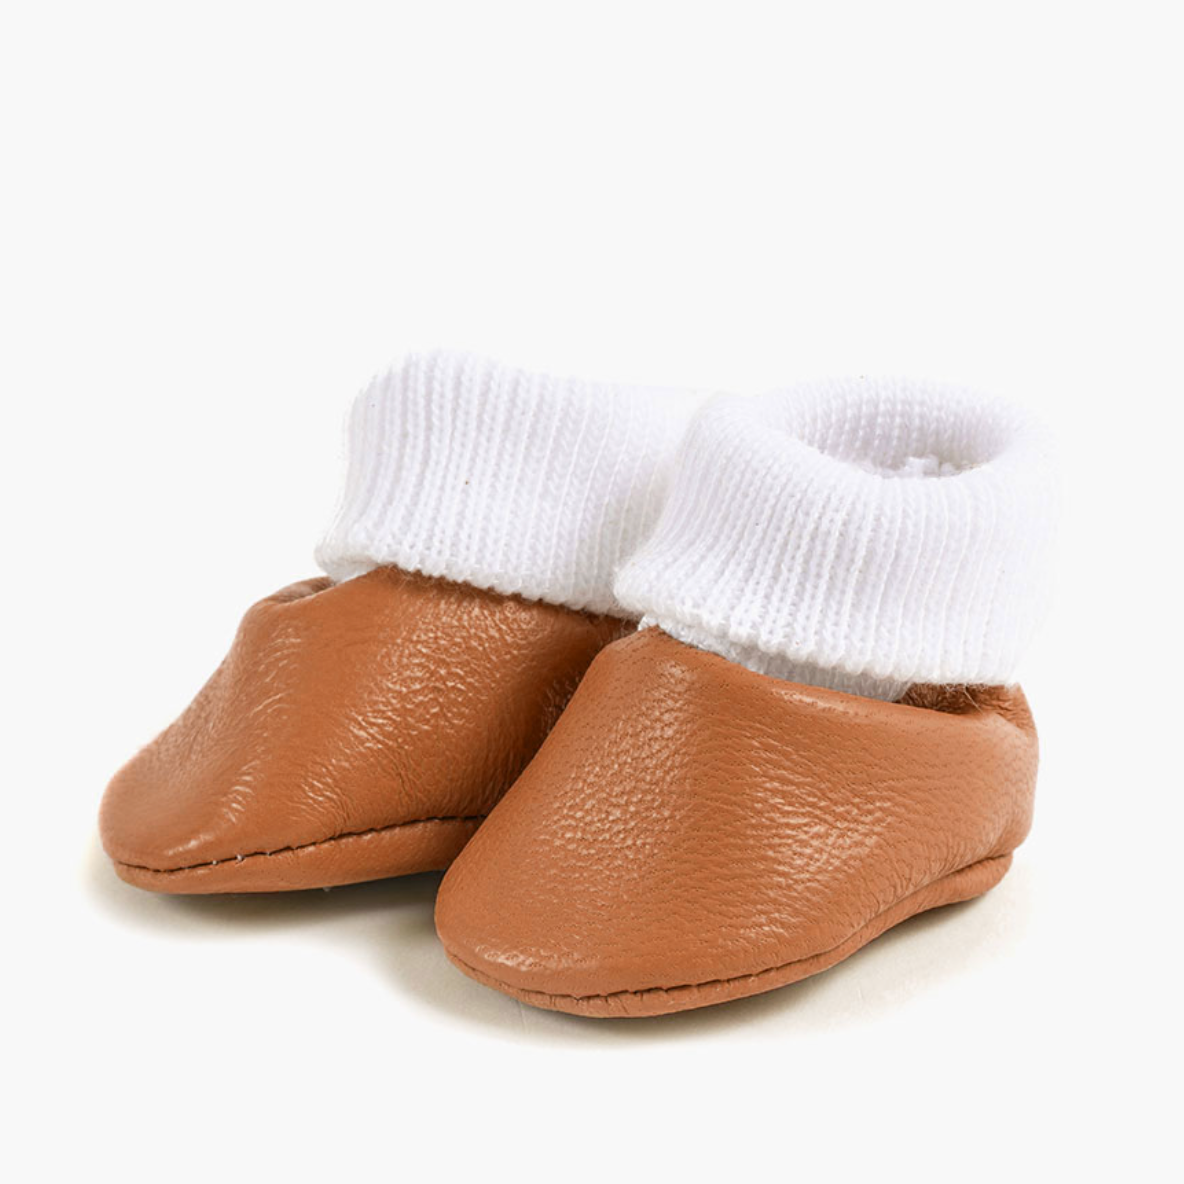 Minikane X Patt'touch Doll Sock Slippers in cognac leather